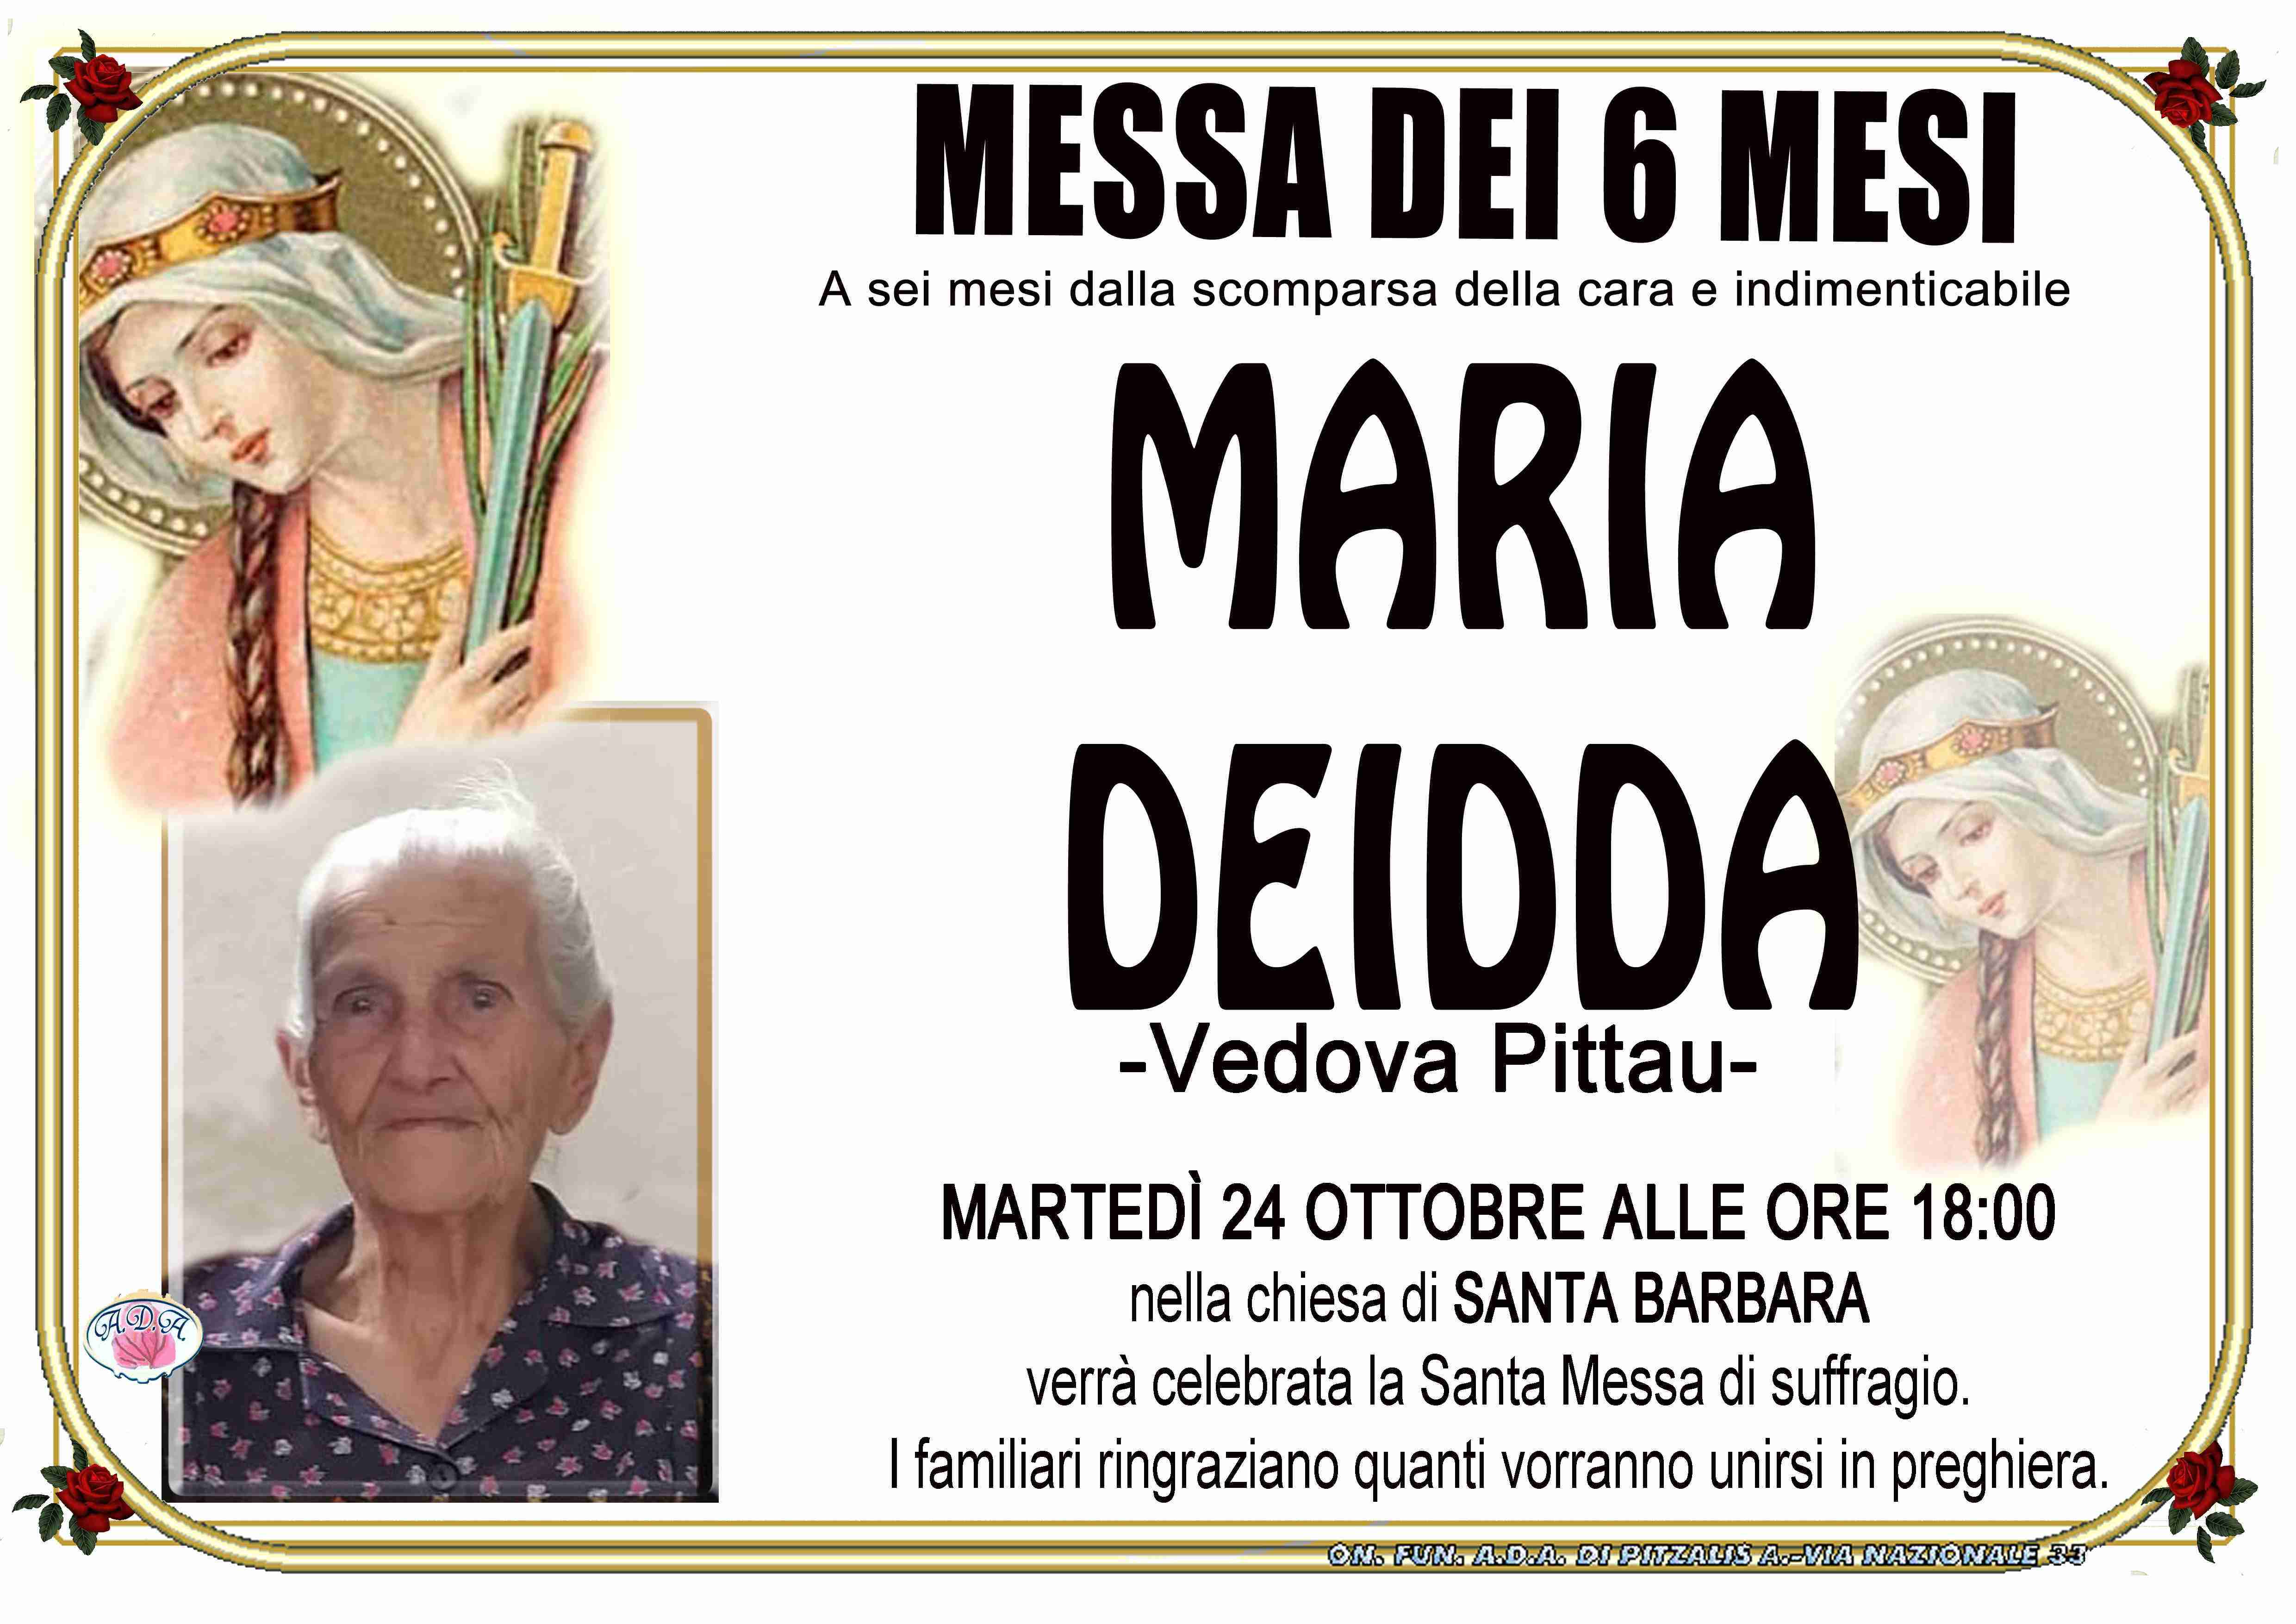 Maria Deidda